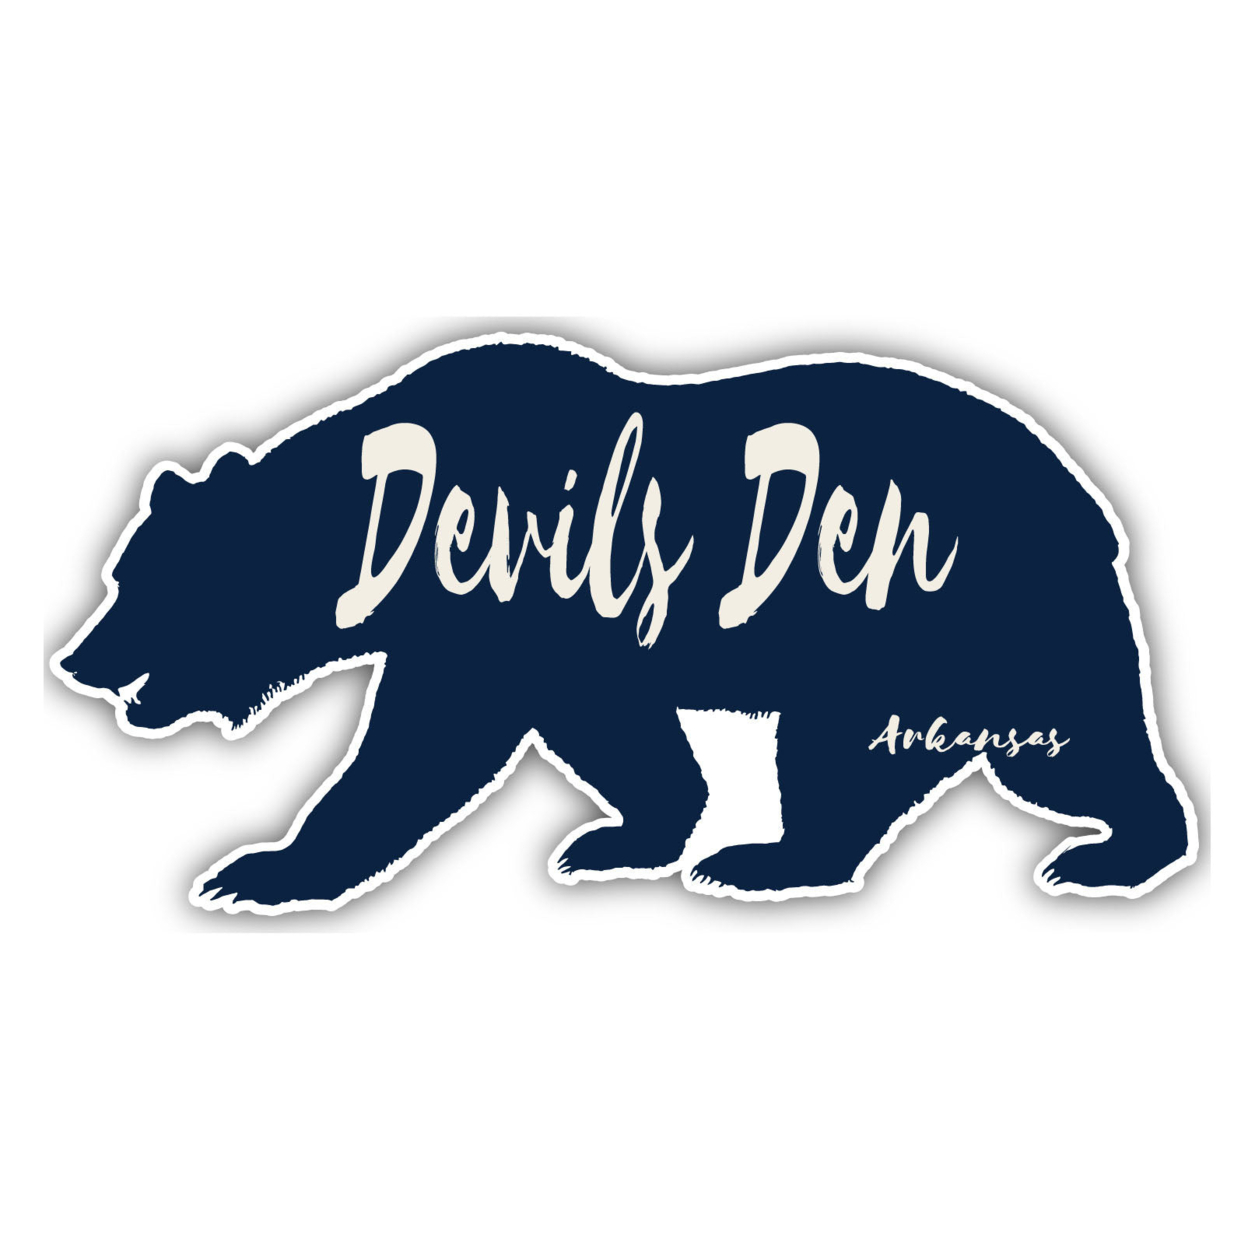 Devils Den Arkansas Souvenir Decorative Stickers (Choose Theme And Size) - 4-Pack, 12-Inch, Great Outdoors